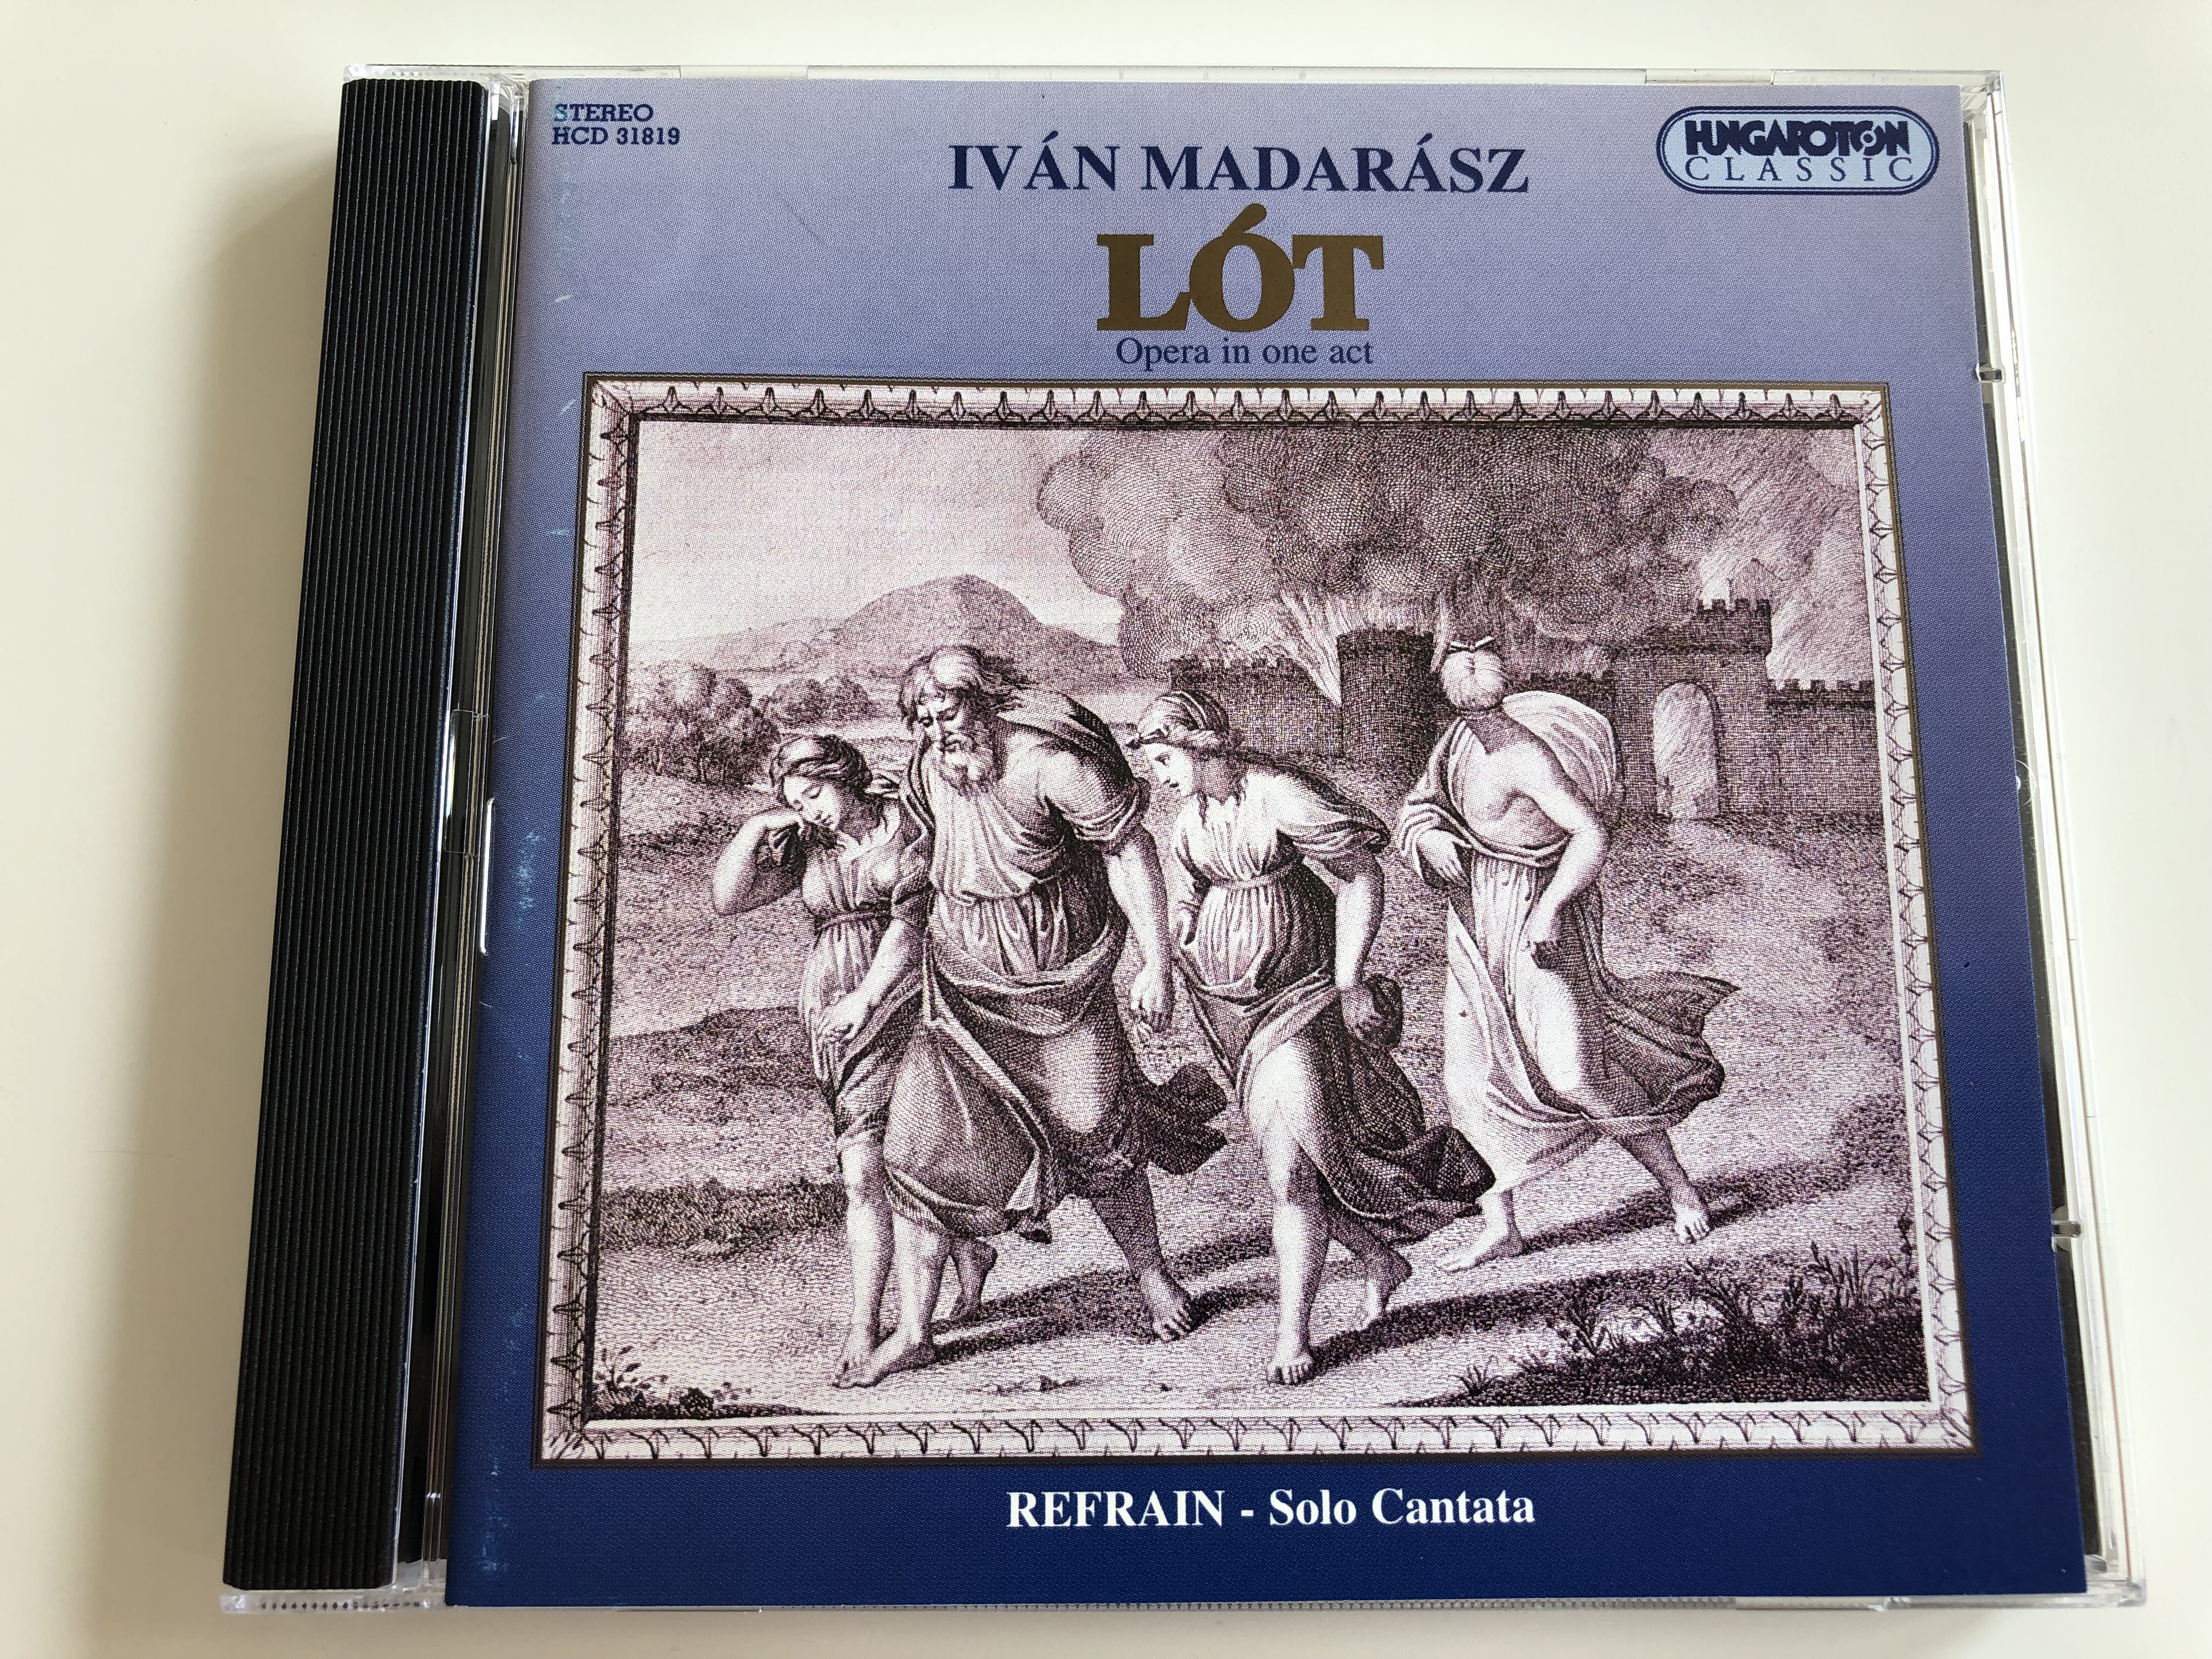 iv-n-madar-sz-l-t-opera-in-one-act-refrain-solo-cantata-hungaroton-classic-hcd-31819-audio-cd-1998-words-by-gnes-romh-nyi-1-.jpg